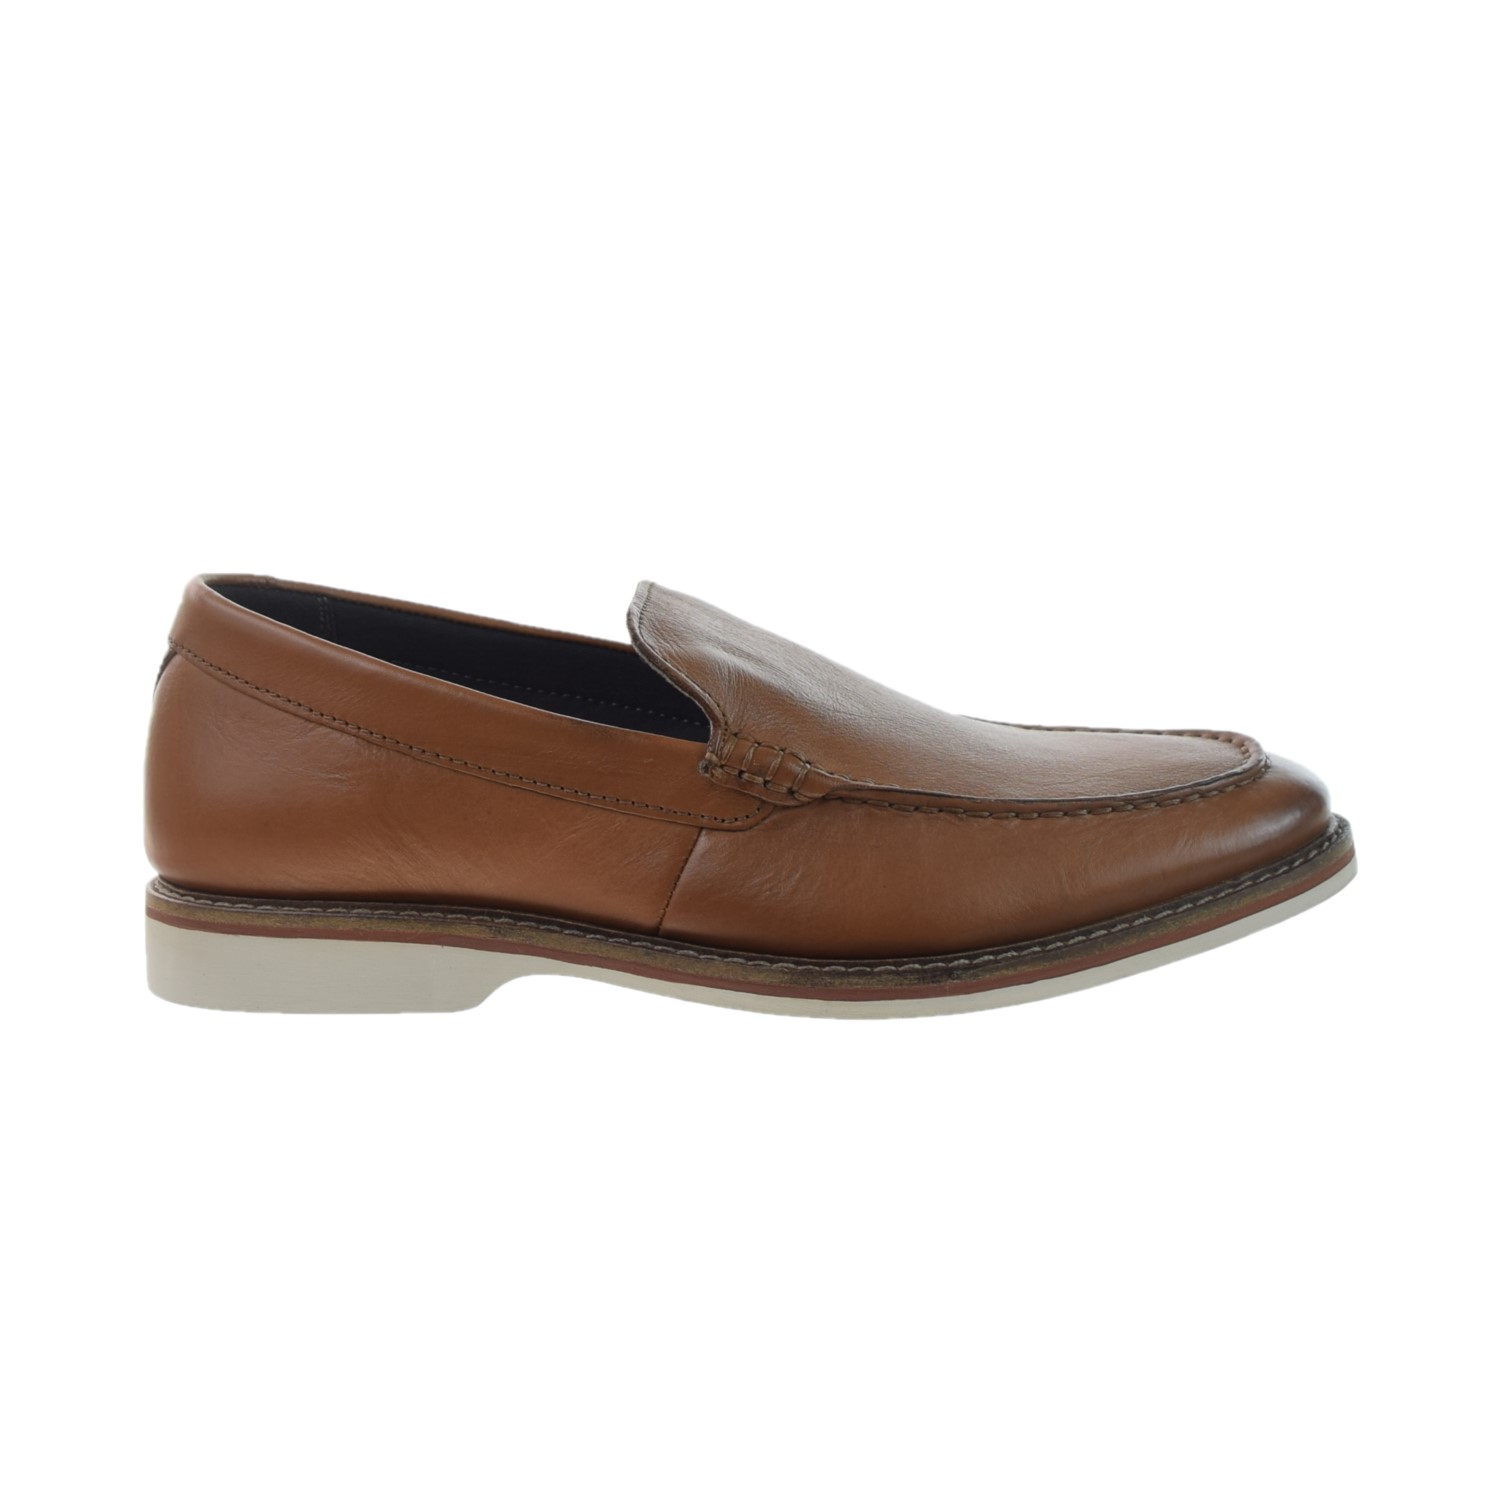 Clarks Atticus Edge Men's Slip-On Loafers Tan Leather 26148225 | eBay